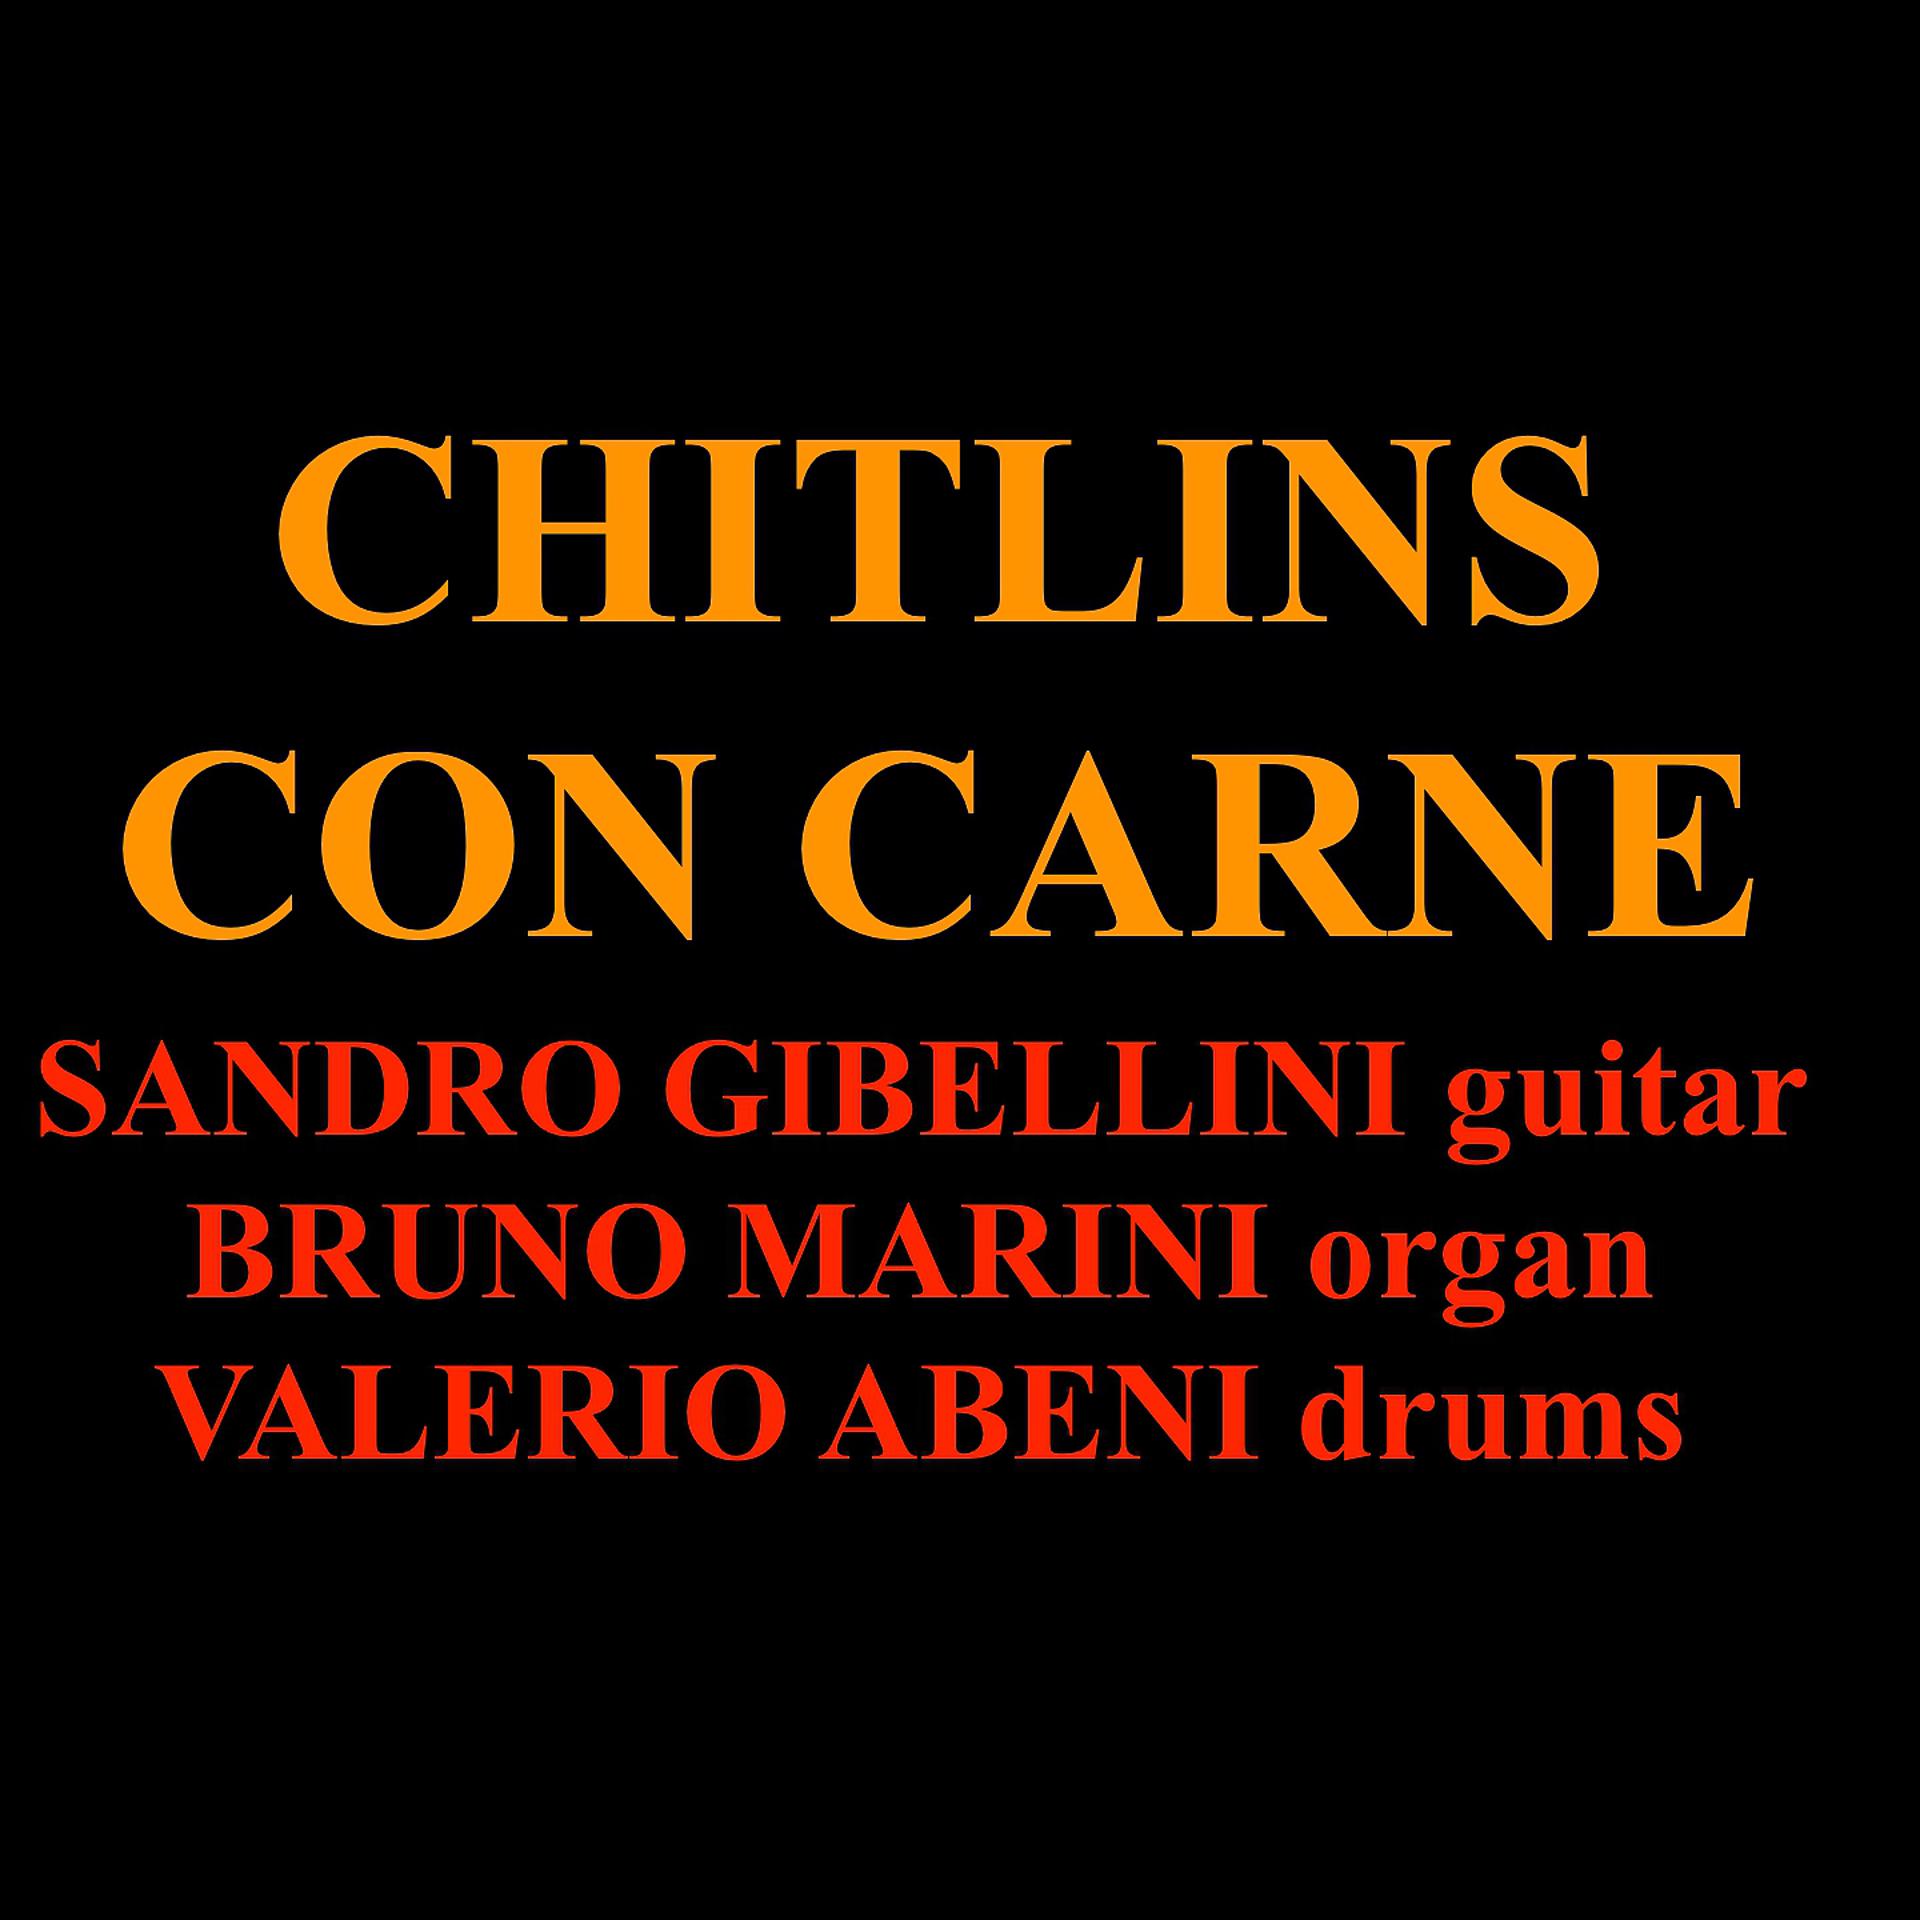 Постер альбома Chitlins Con Carne